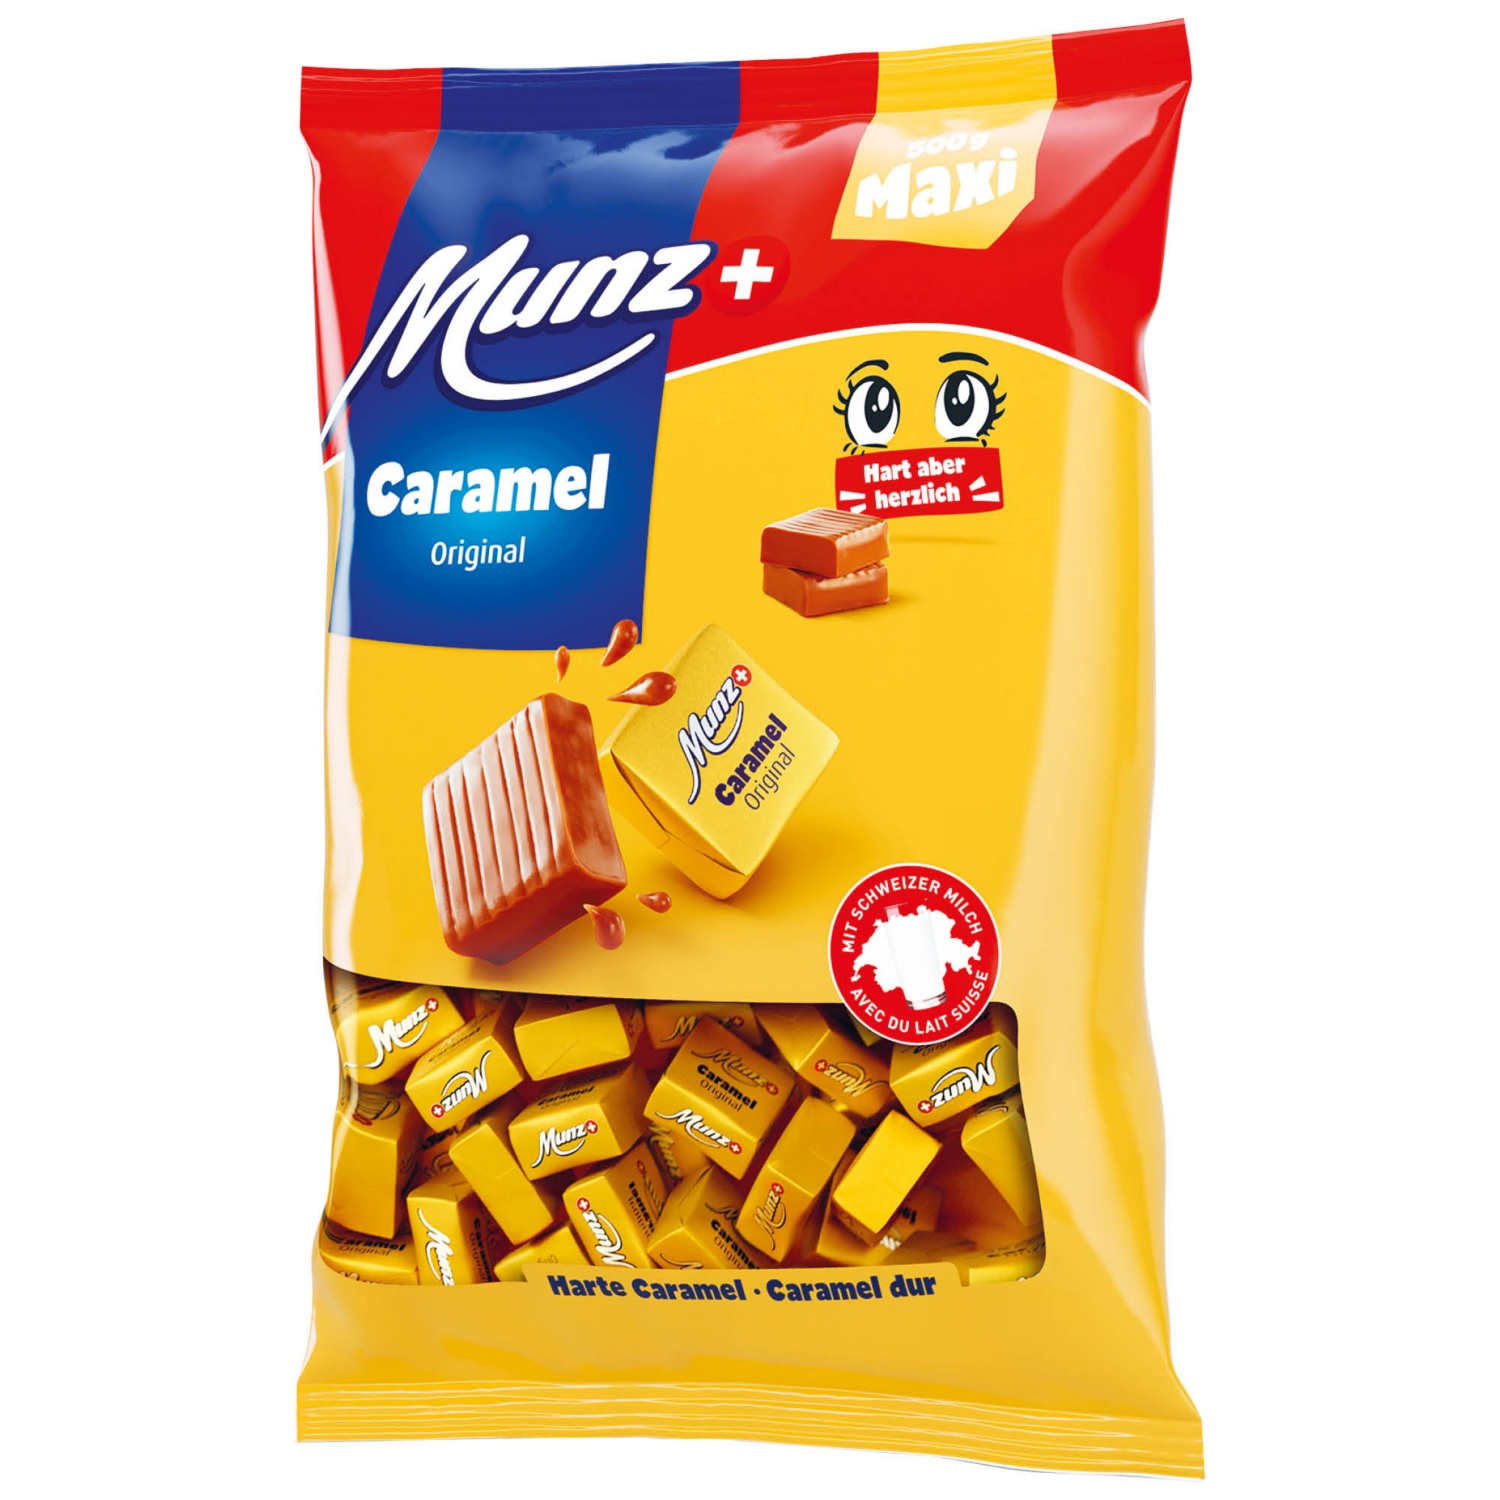 MUNZ Caramel Beutel, Original